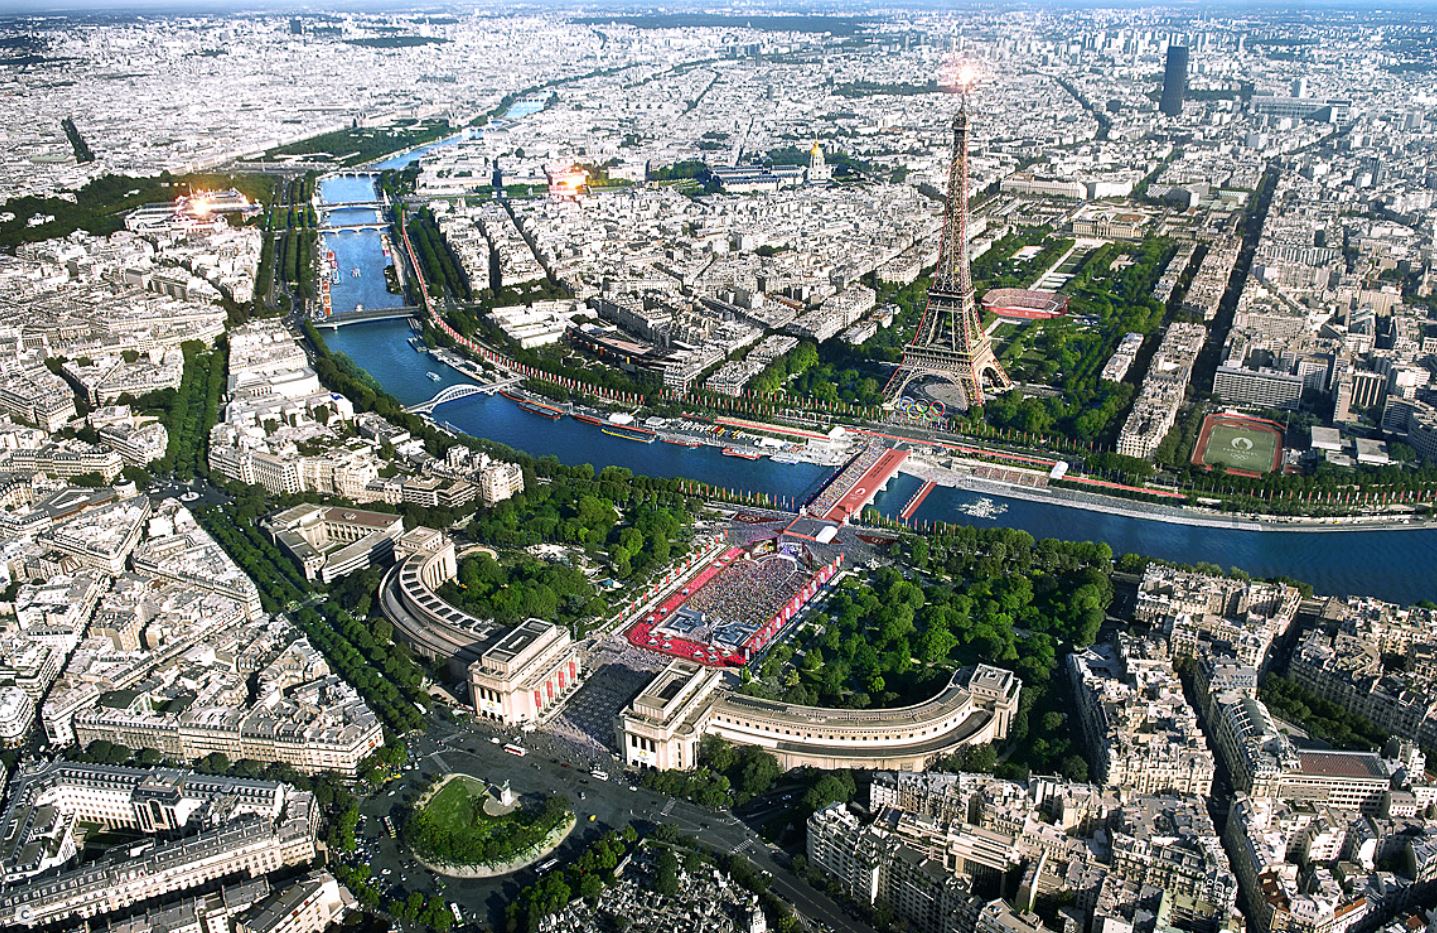 Olympics Paris